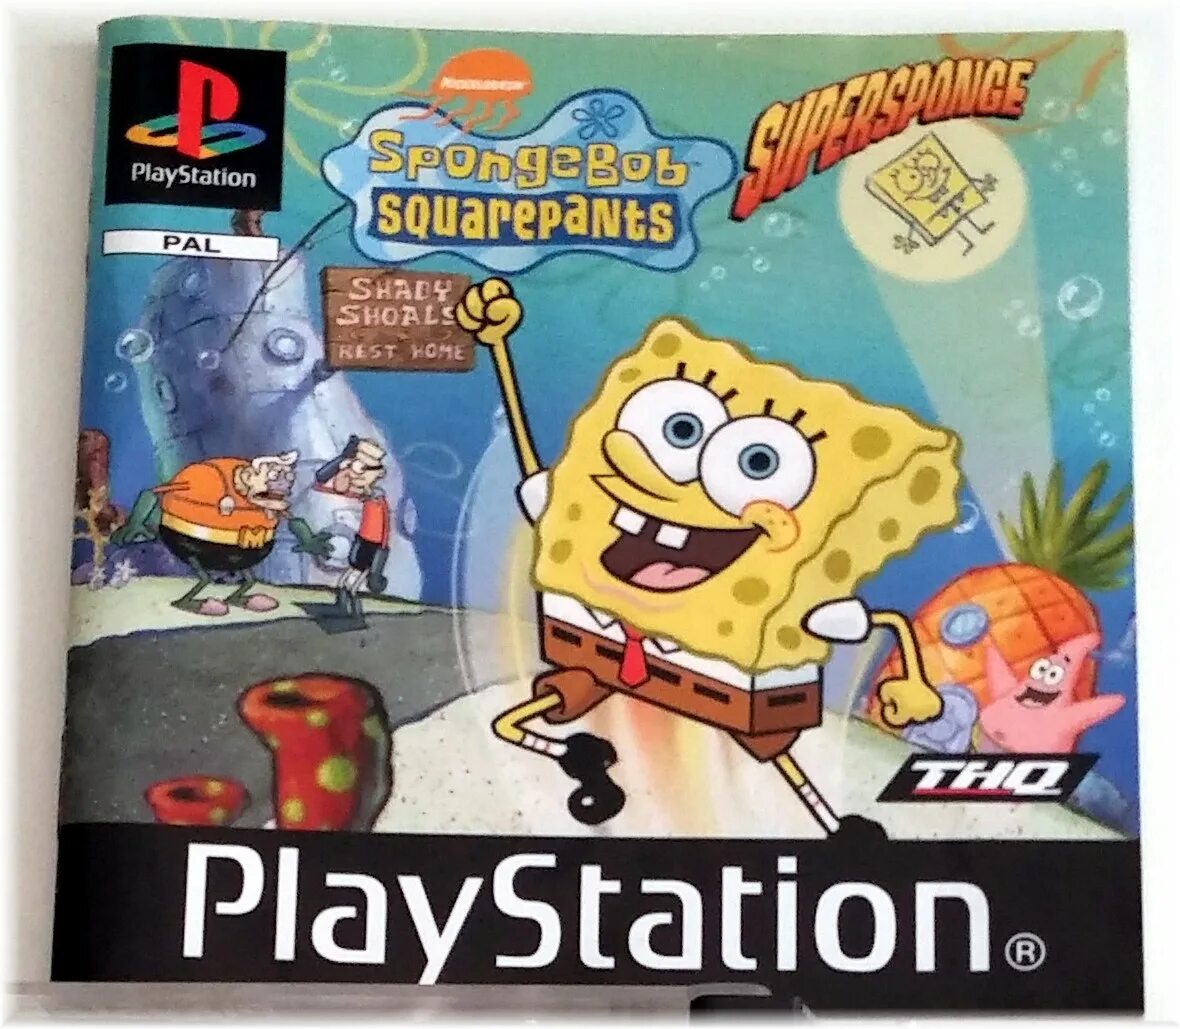 Spongebob revenge. SUPERSPONGE ps1. Nickelodeon Spongebob Squarepants - SUPERSPONGE ps1. Spongebob Squarepants ps1. Spongebob SUPERSPONGE ps1.